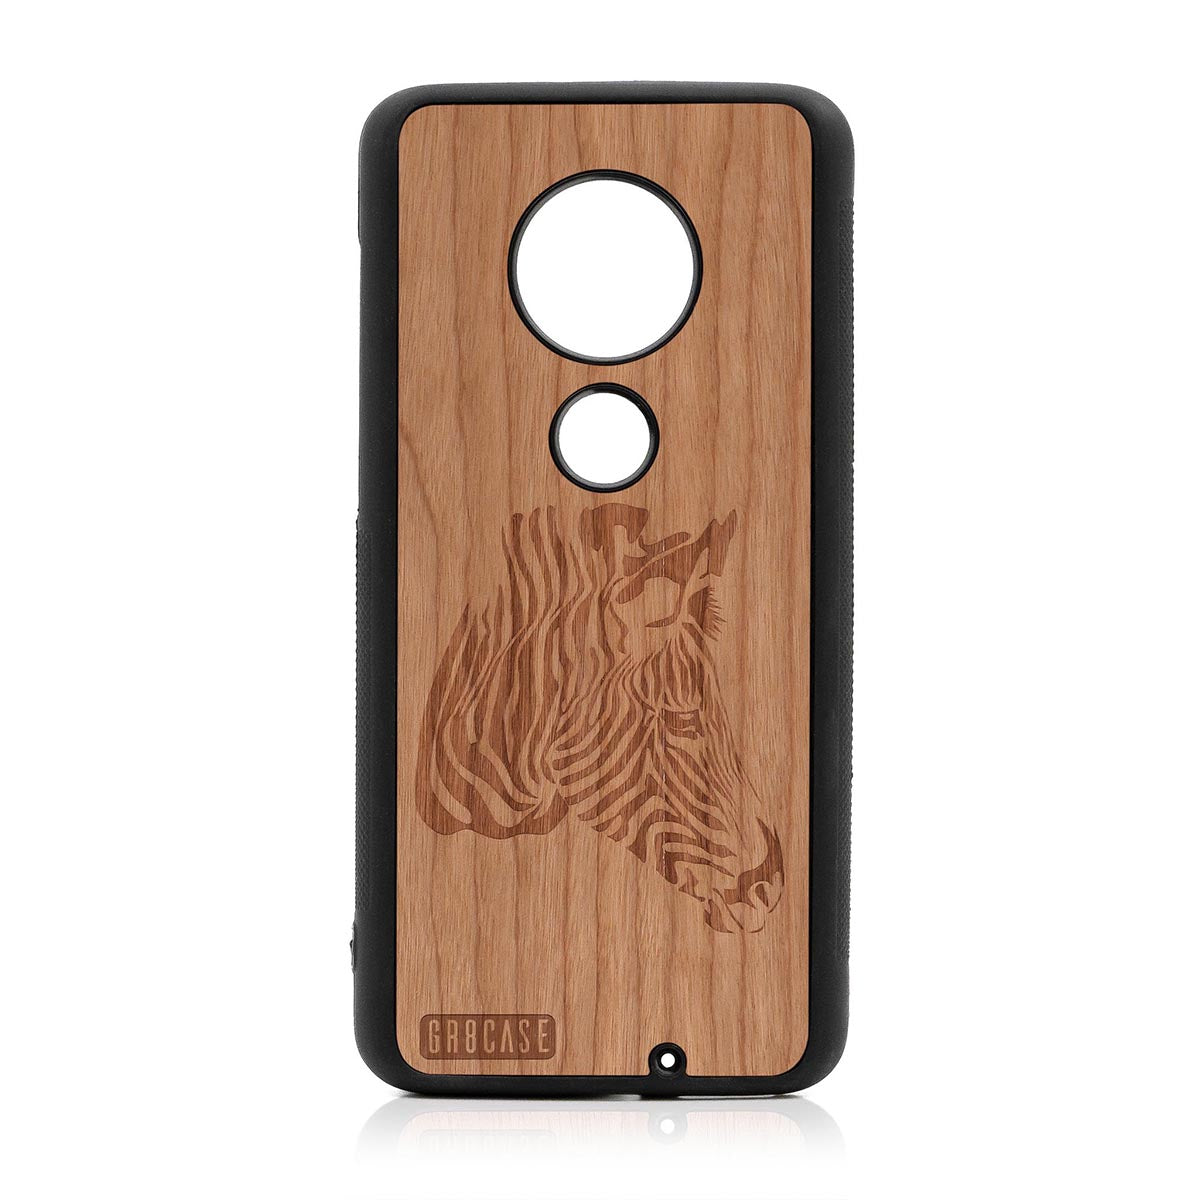 Zebra Design Wood Case For Moto G7 Plus